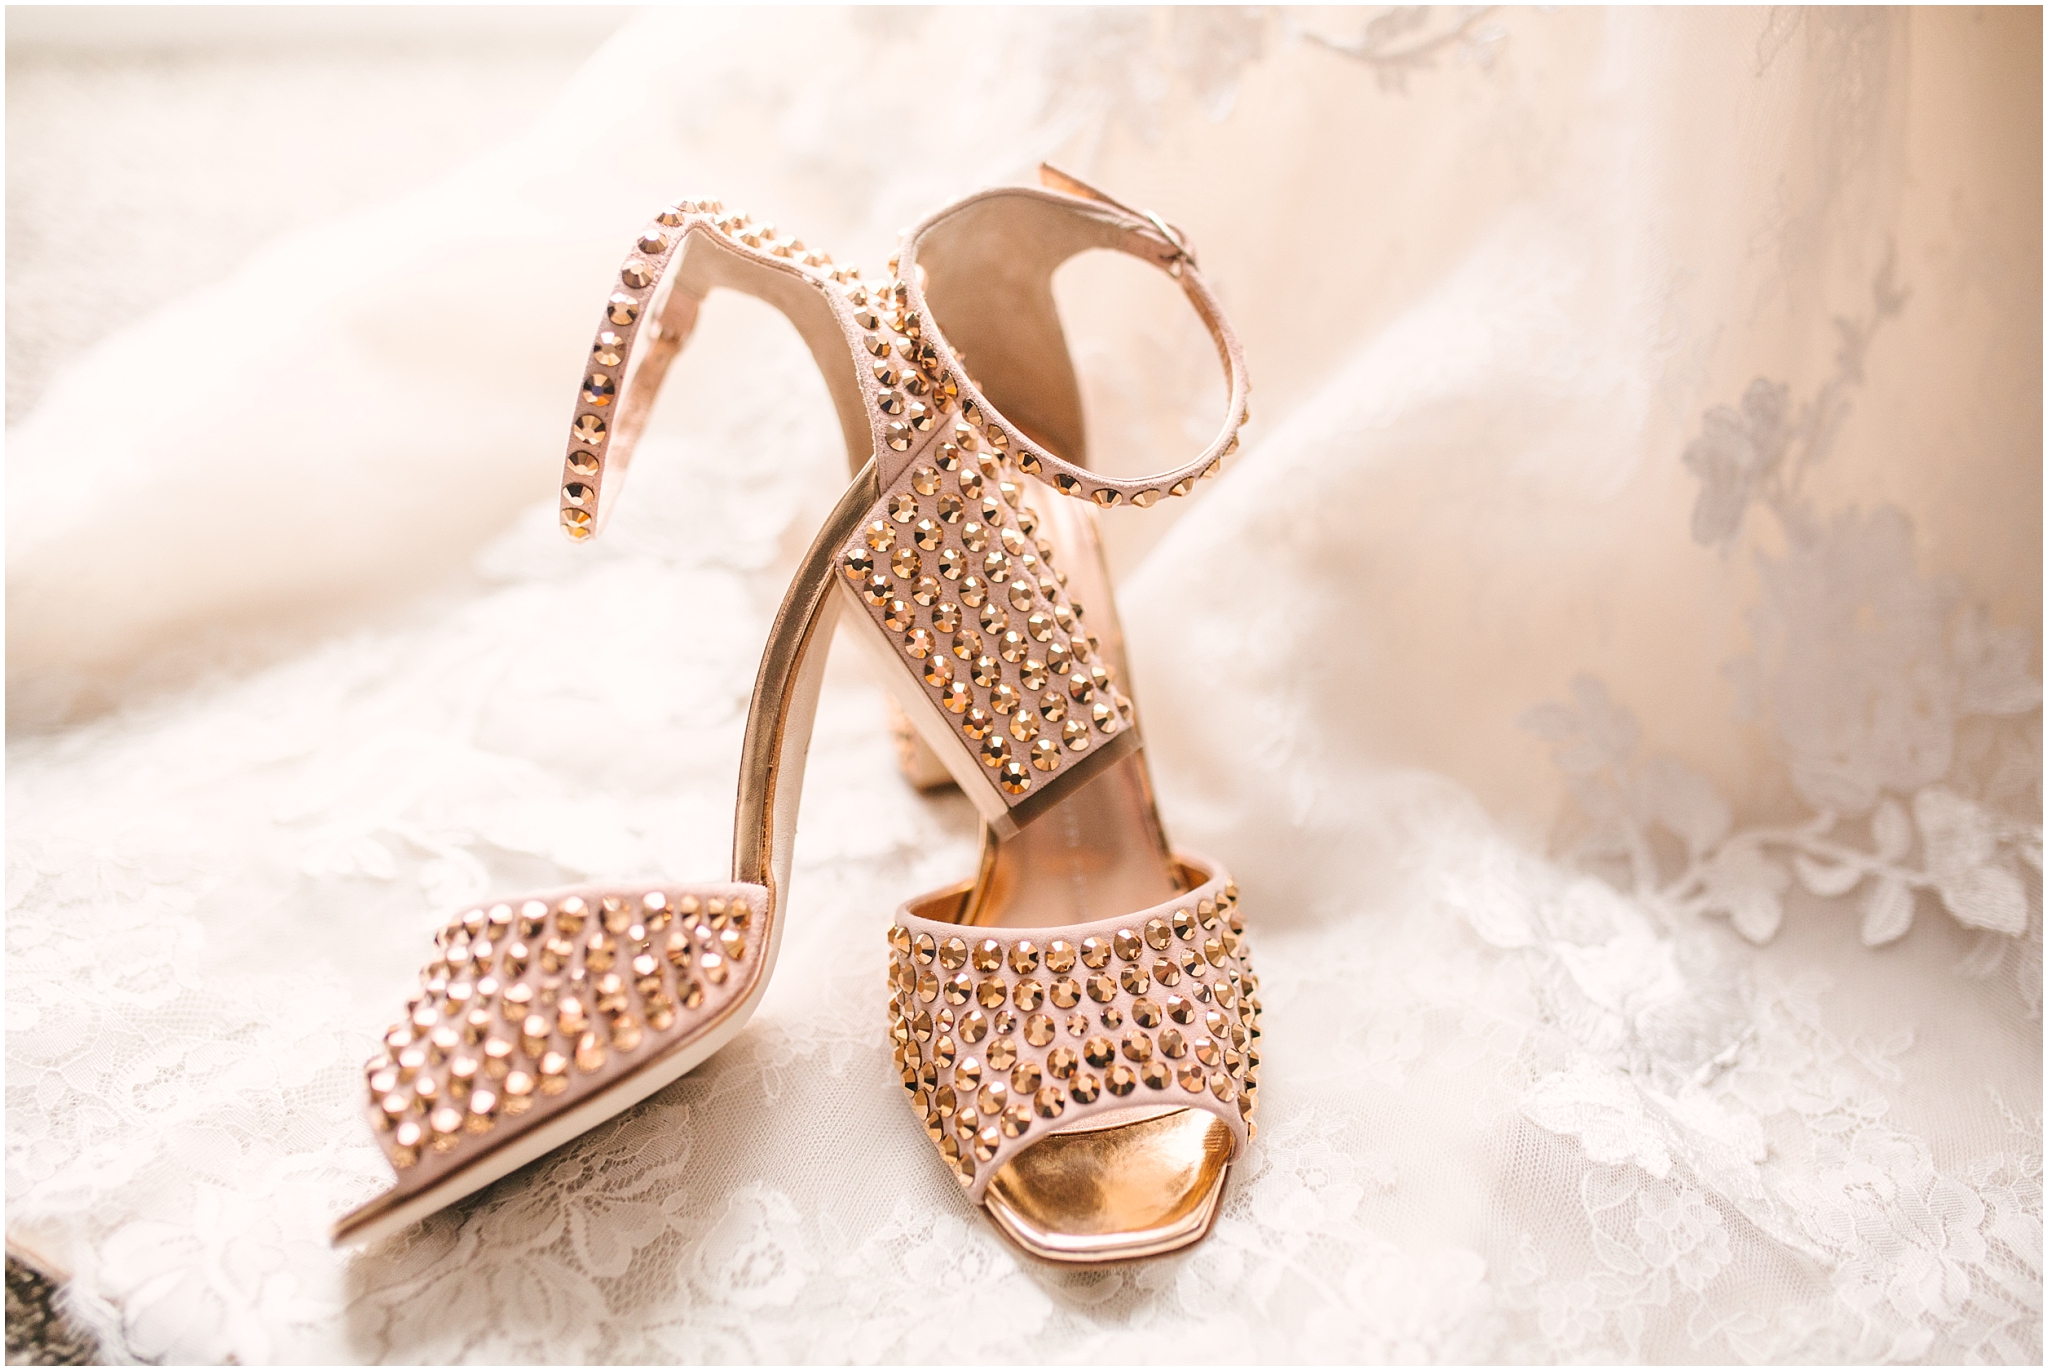 Bride's rose gold studded heels by Giuseppe Zanotti for winter wedding